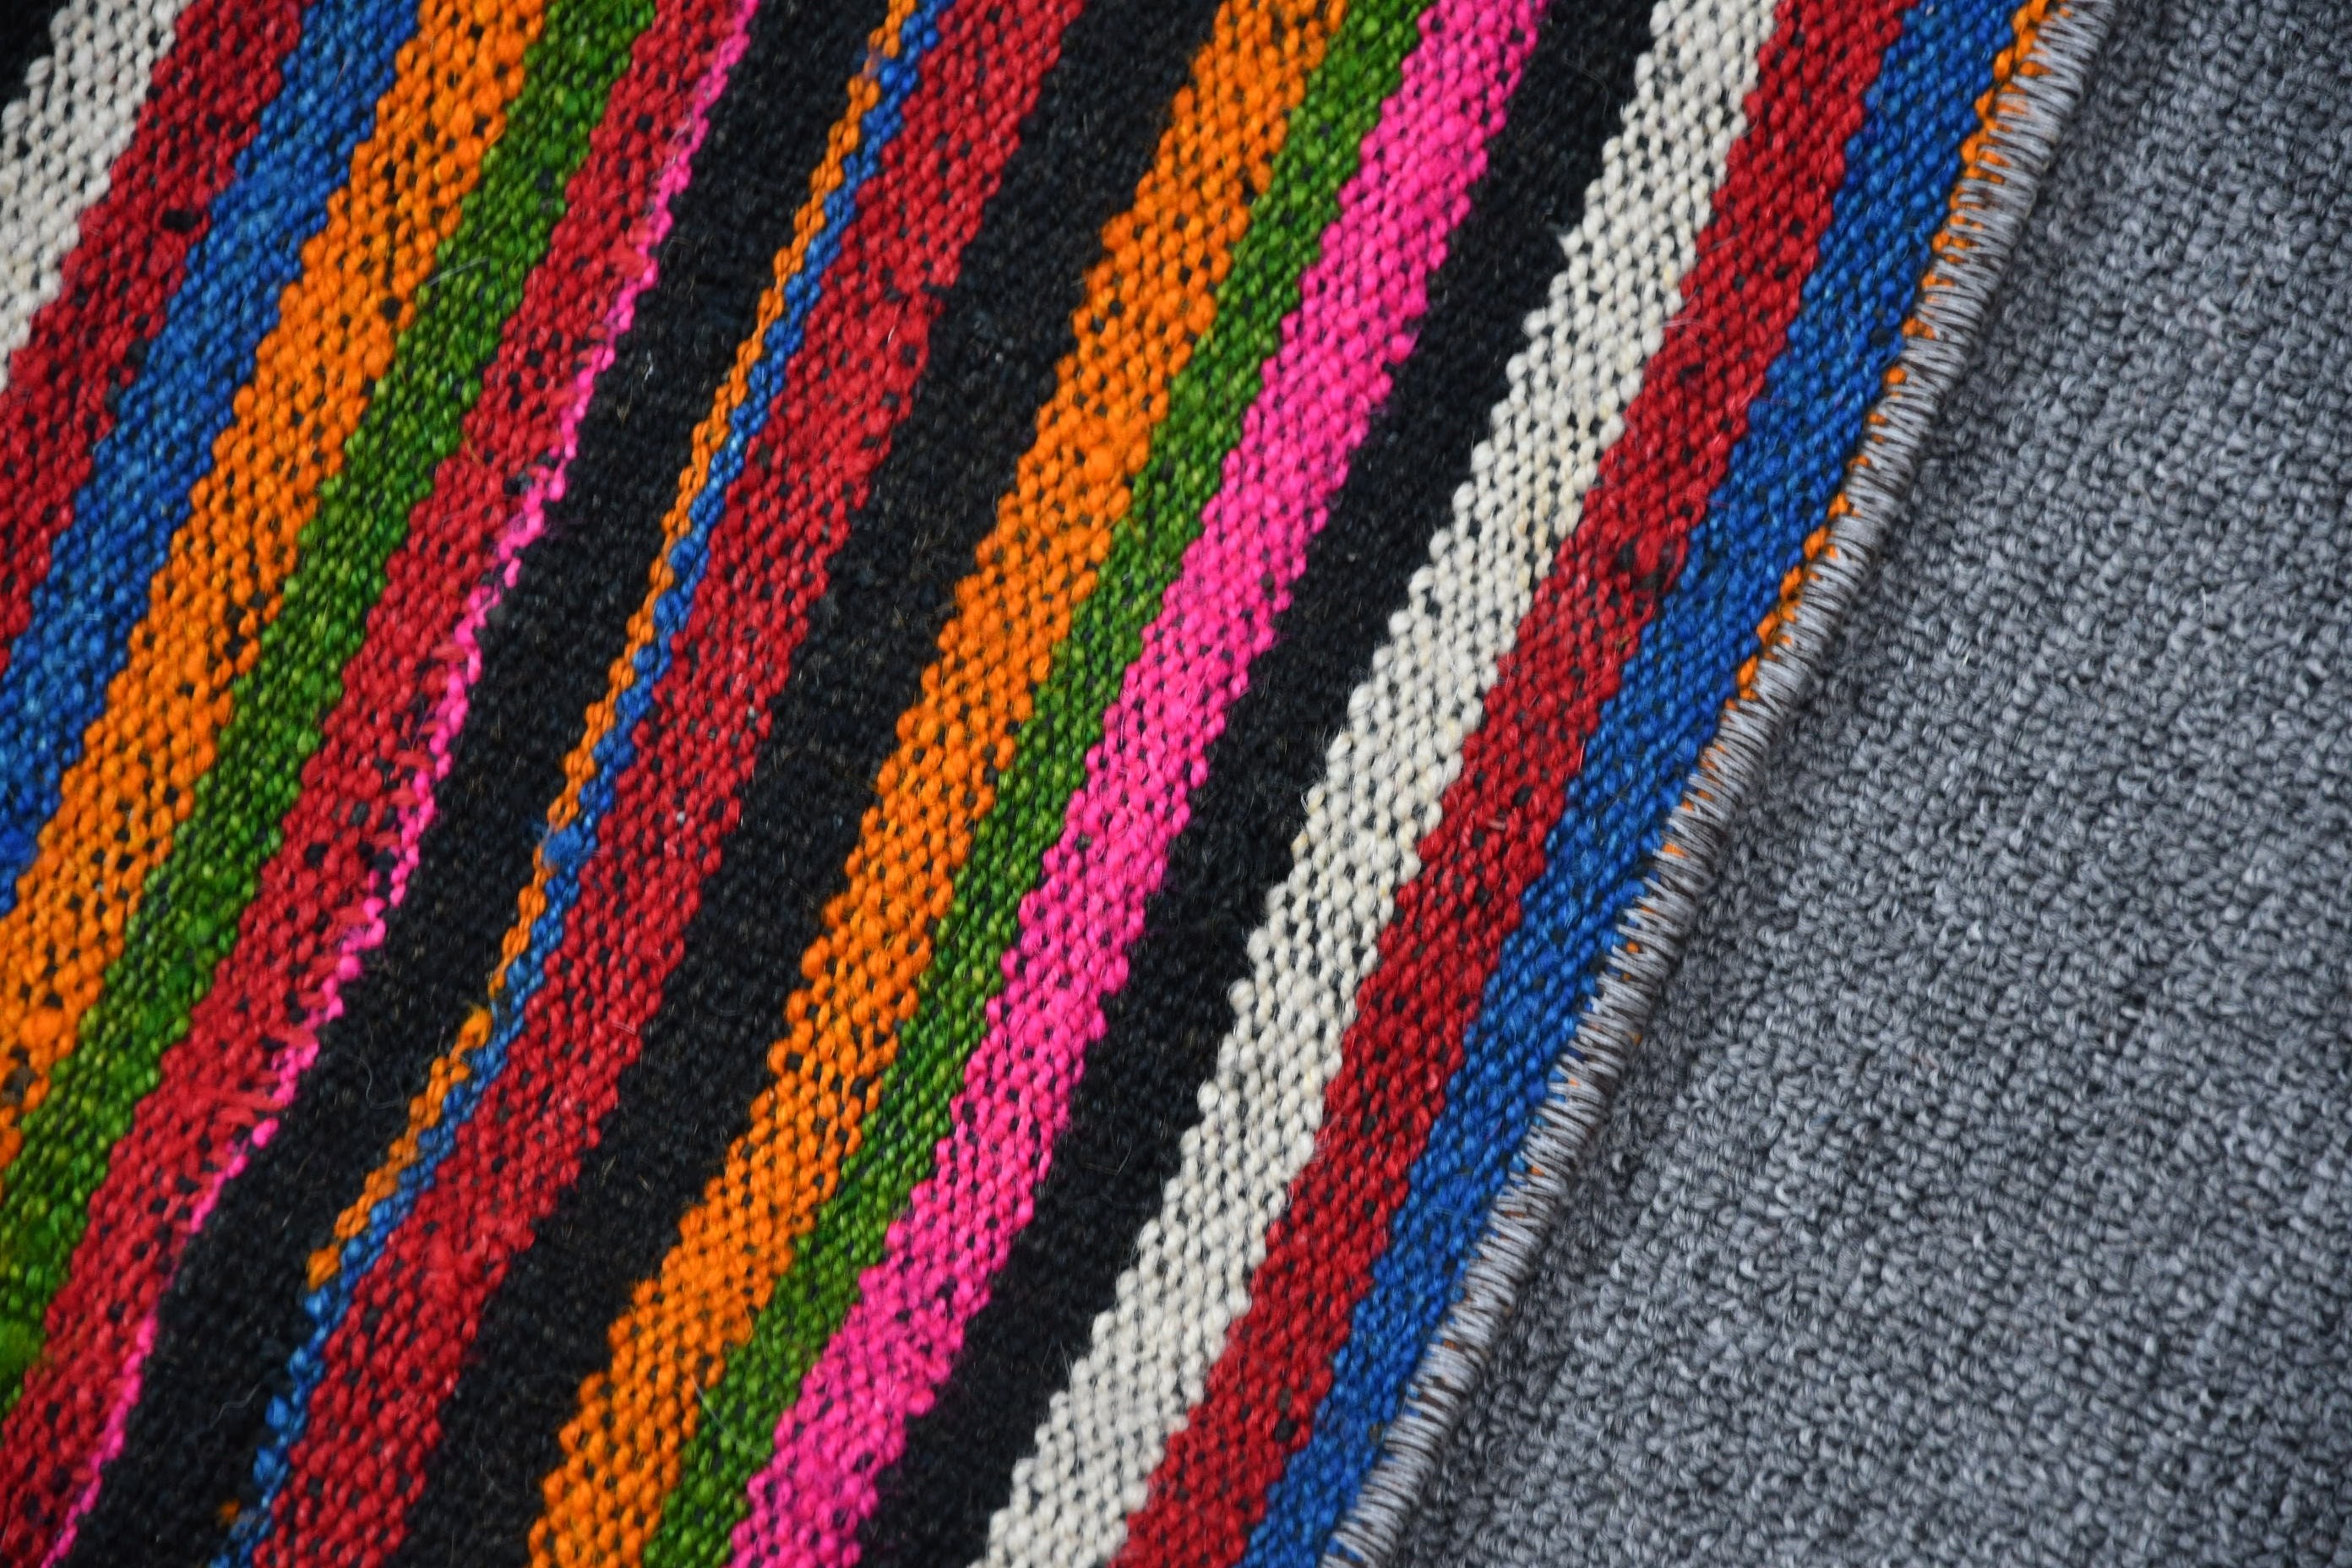 Nursery Rugs, Bathroom Rugs, Turkish Rug, Vintage Rug, Rugs for Wall Hanging, Kilim, Home Decor Rug, Moroccan Rugs, 2.1x2.1 ft Small Rug